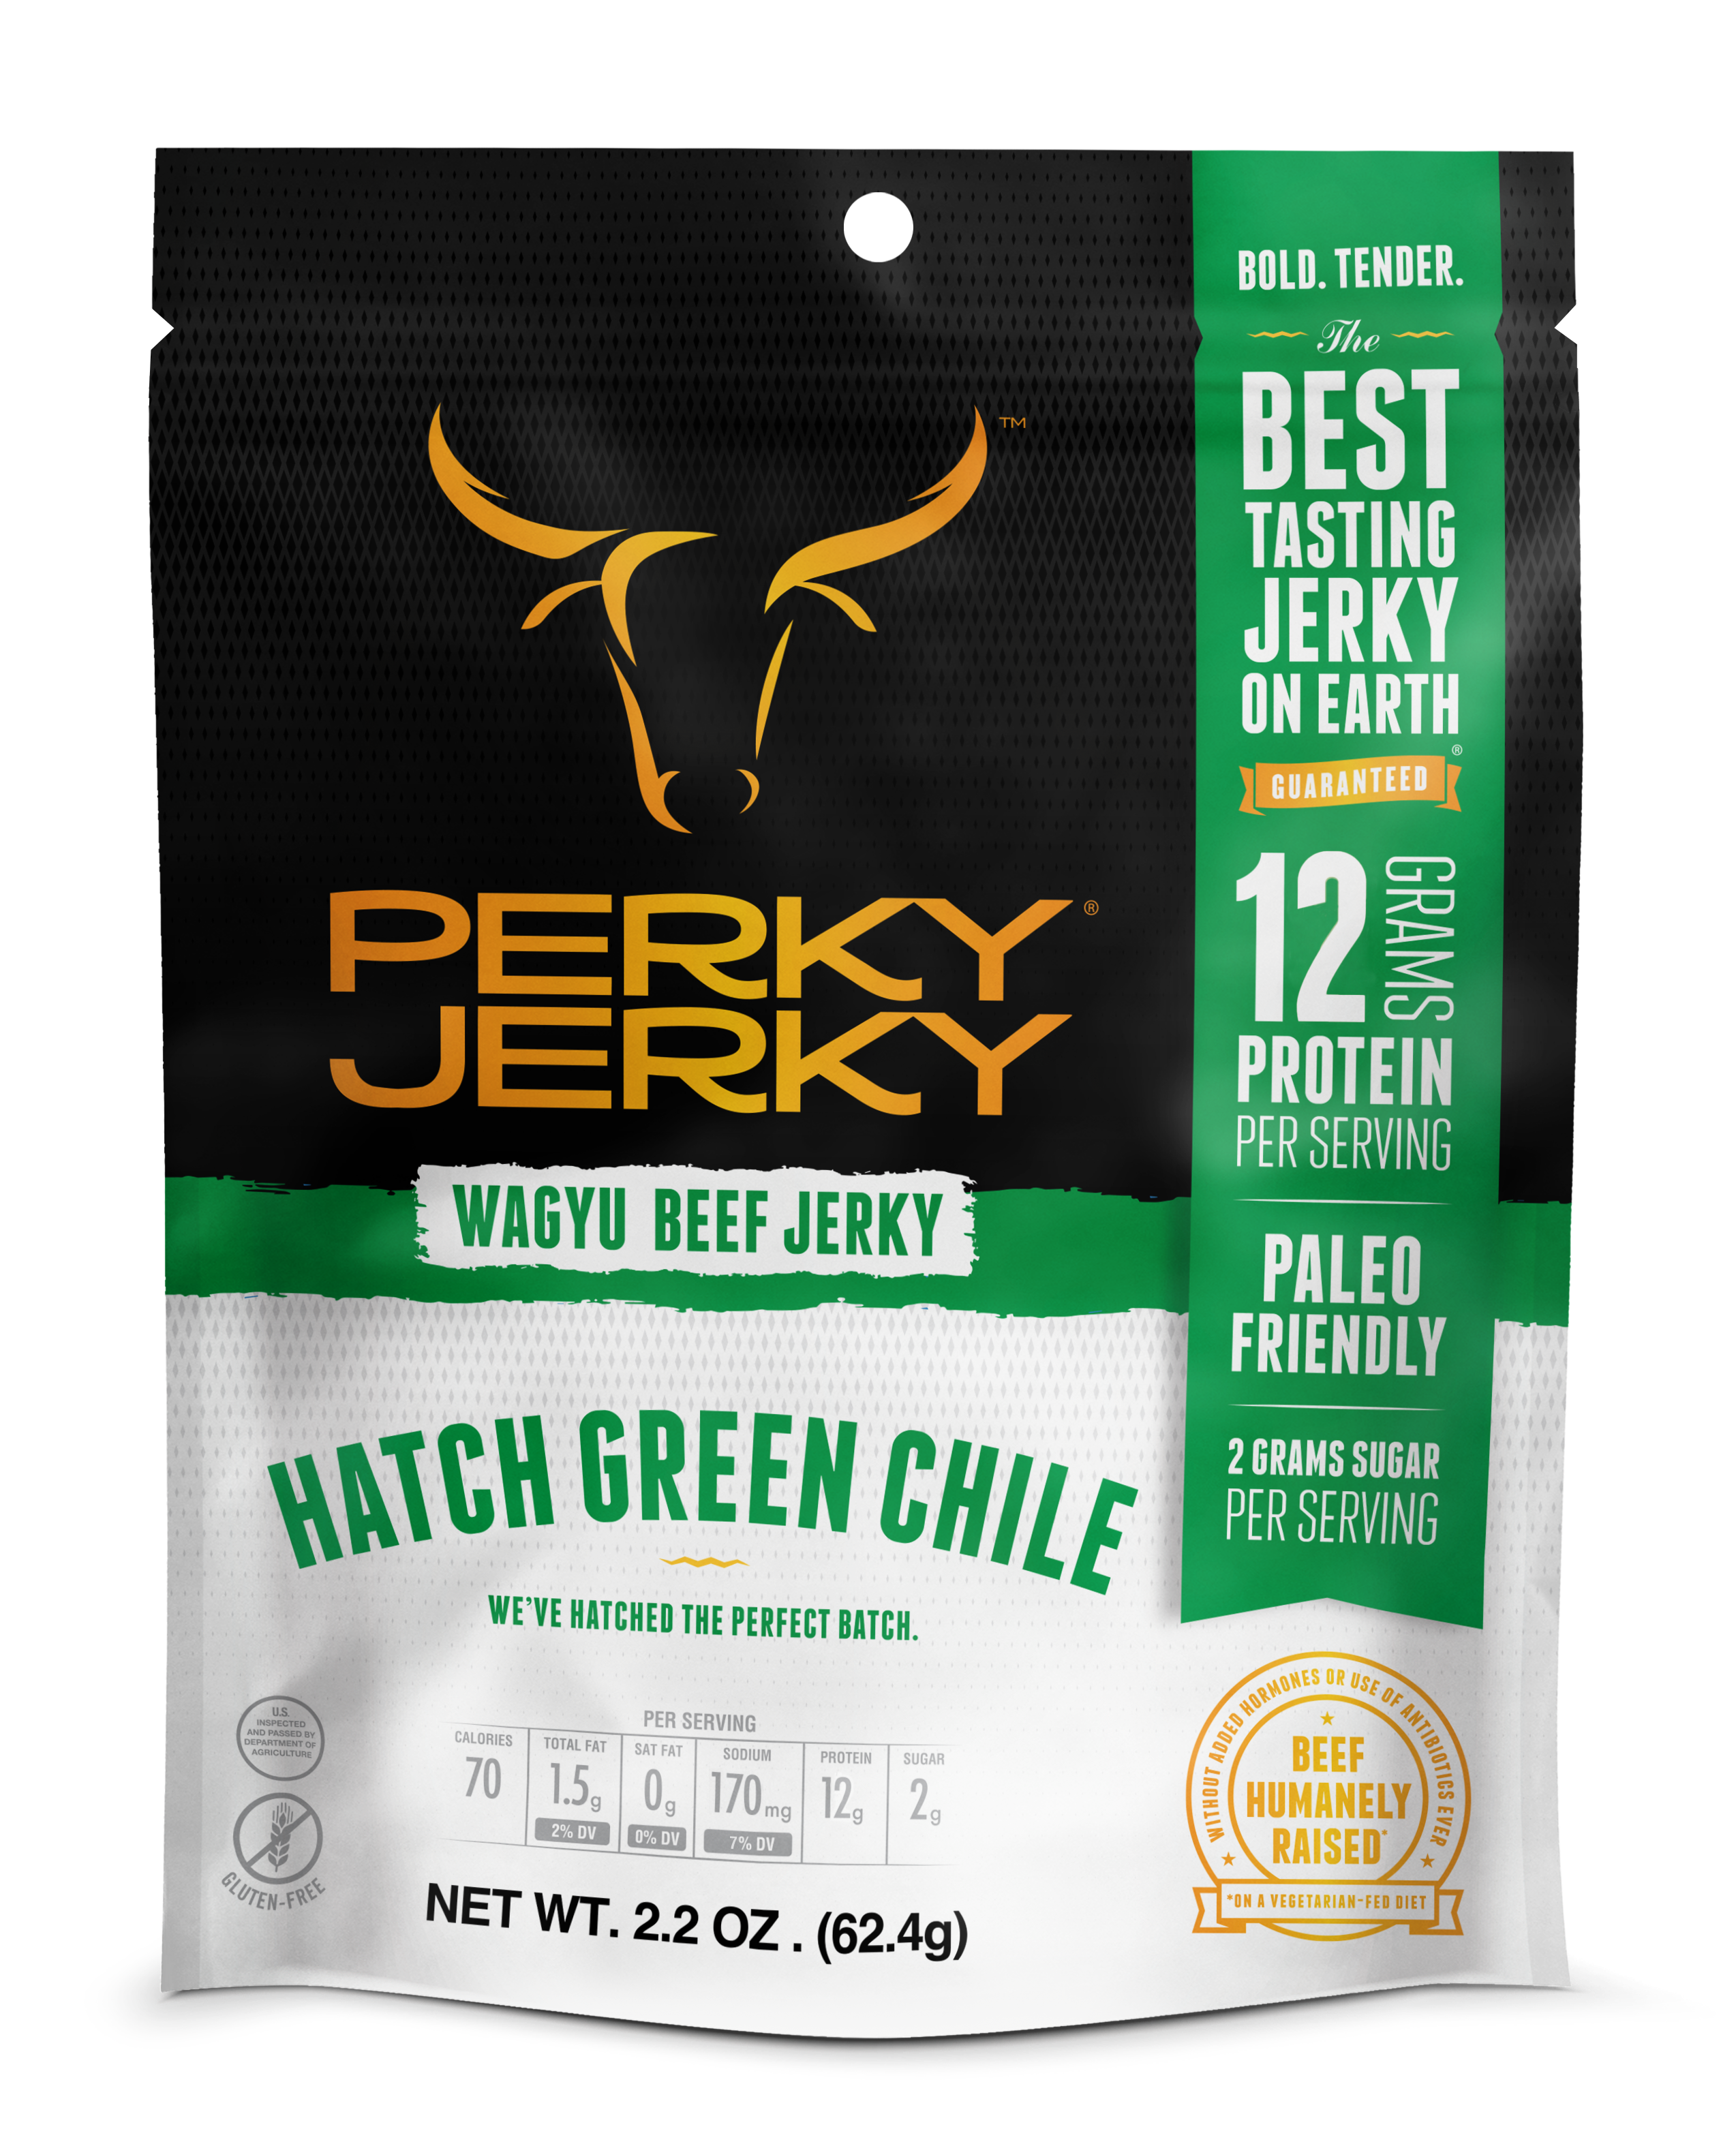 Hatch Green Chile Wagyu Beef Jerky - Paleo Friendly